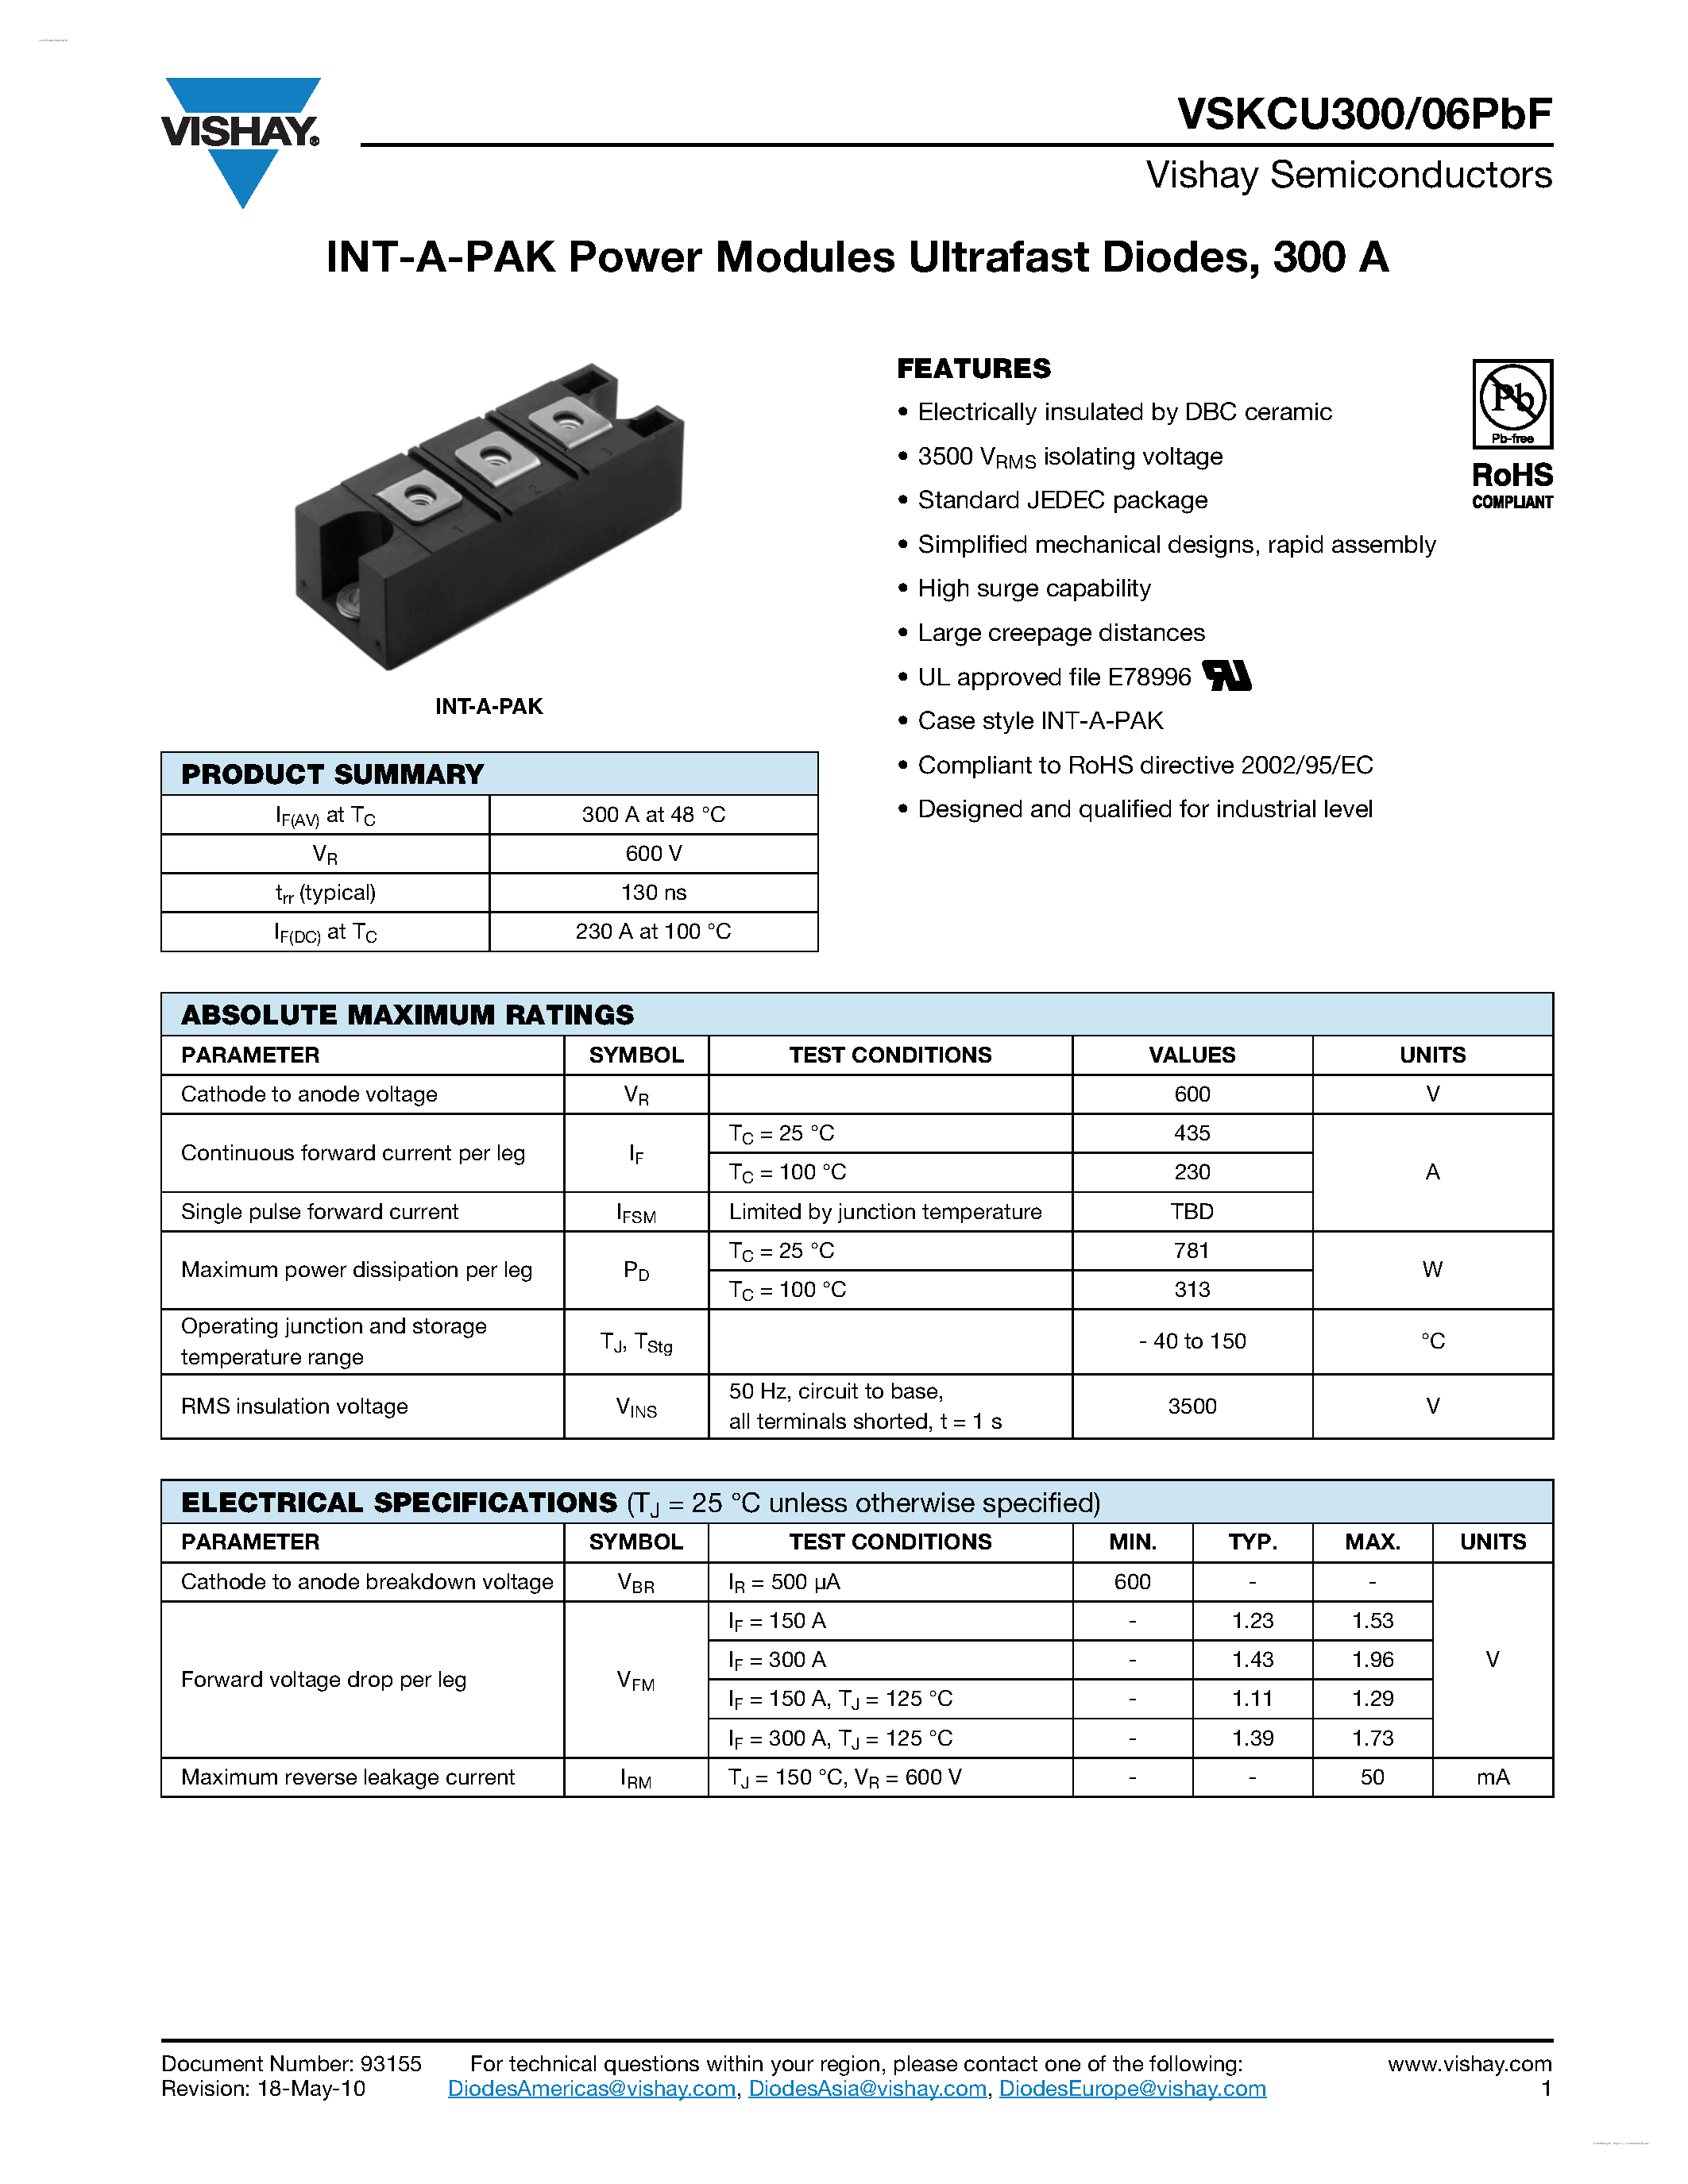 Datasheet VSKCU300/06PBF - INT-A-PAK Power Modules Ultrafast Diodes page 1